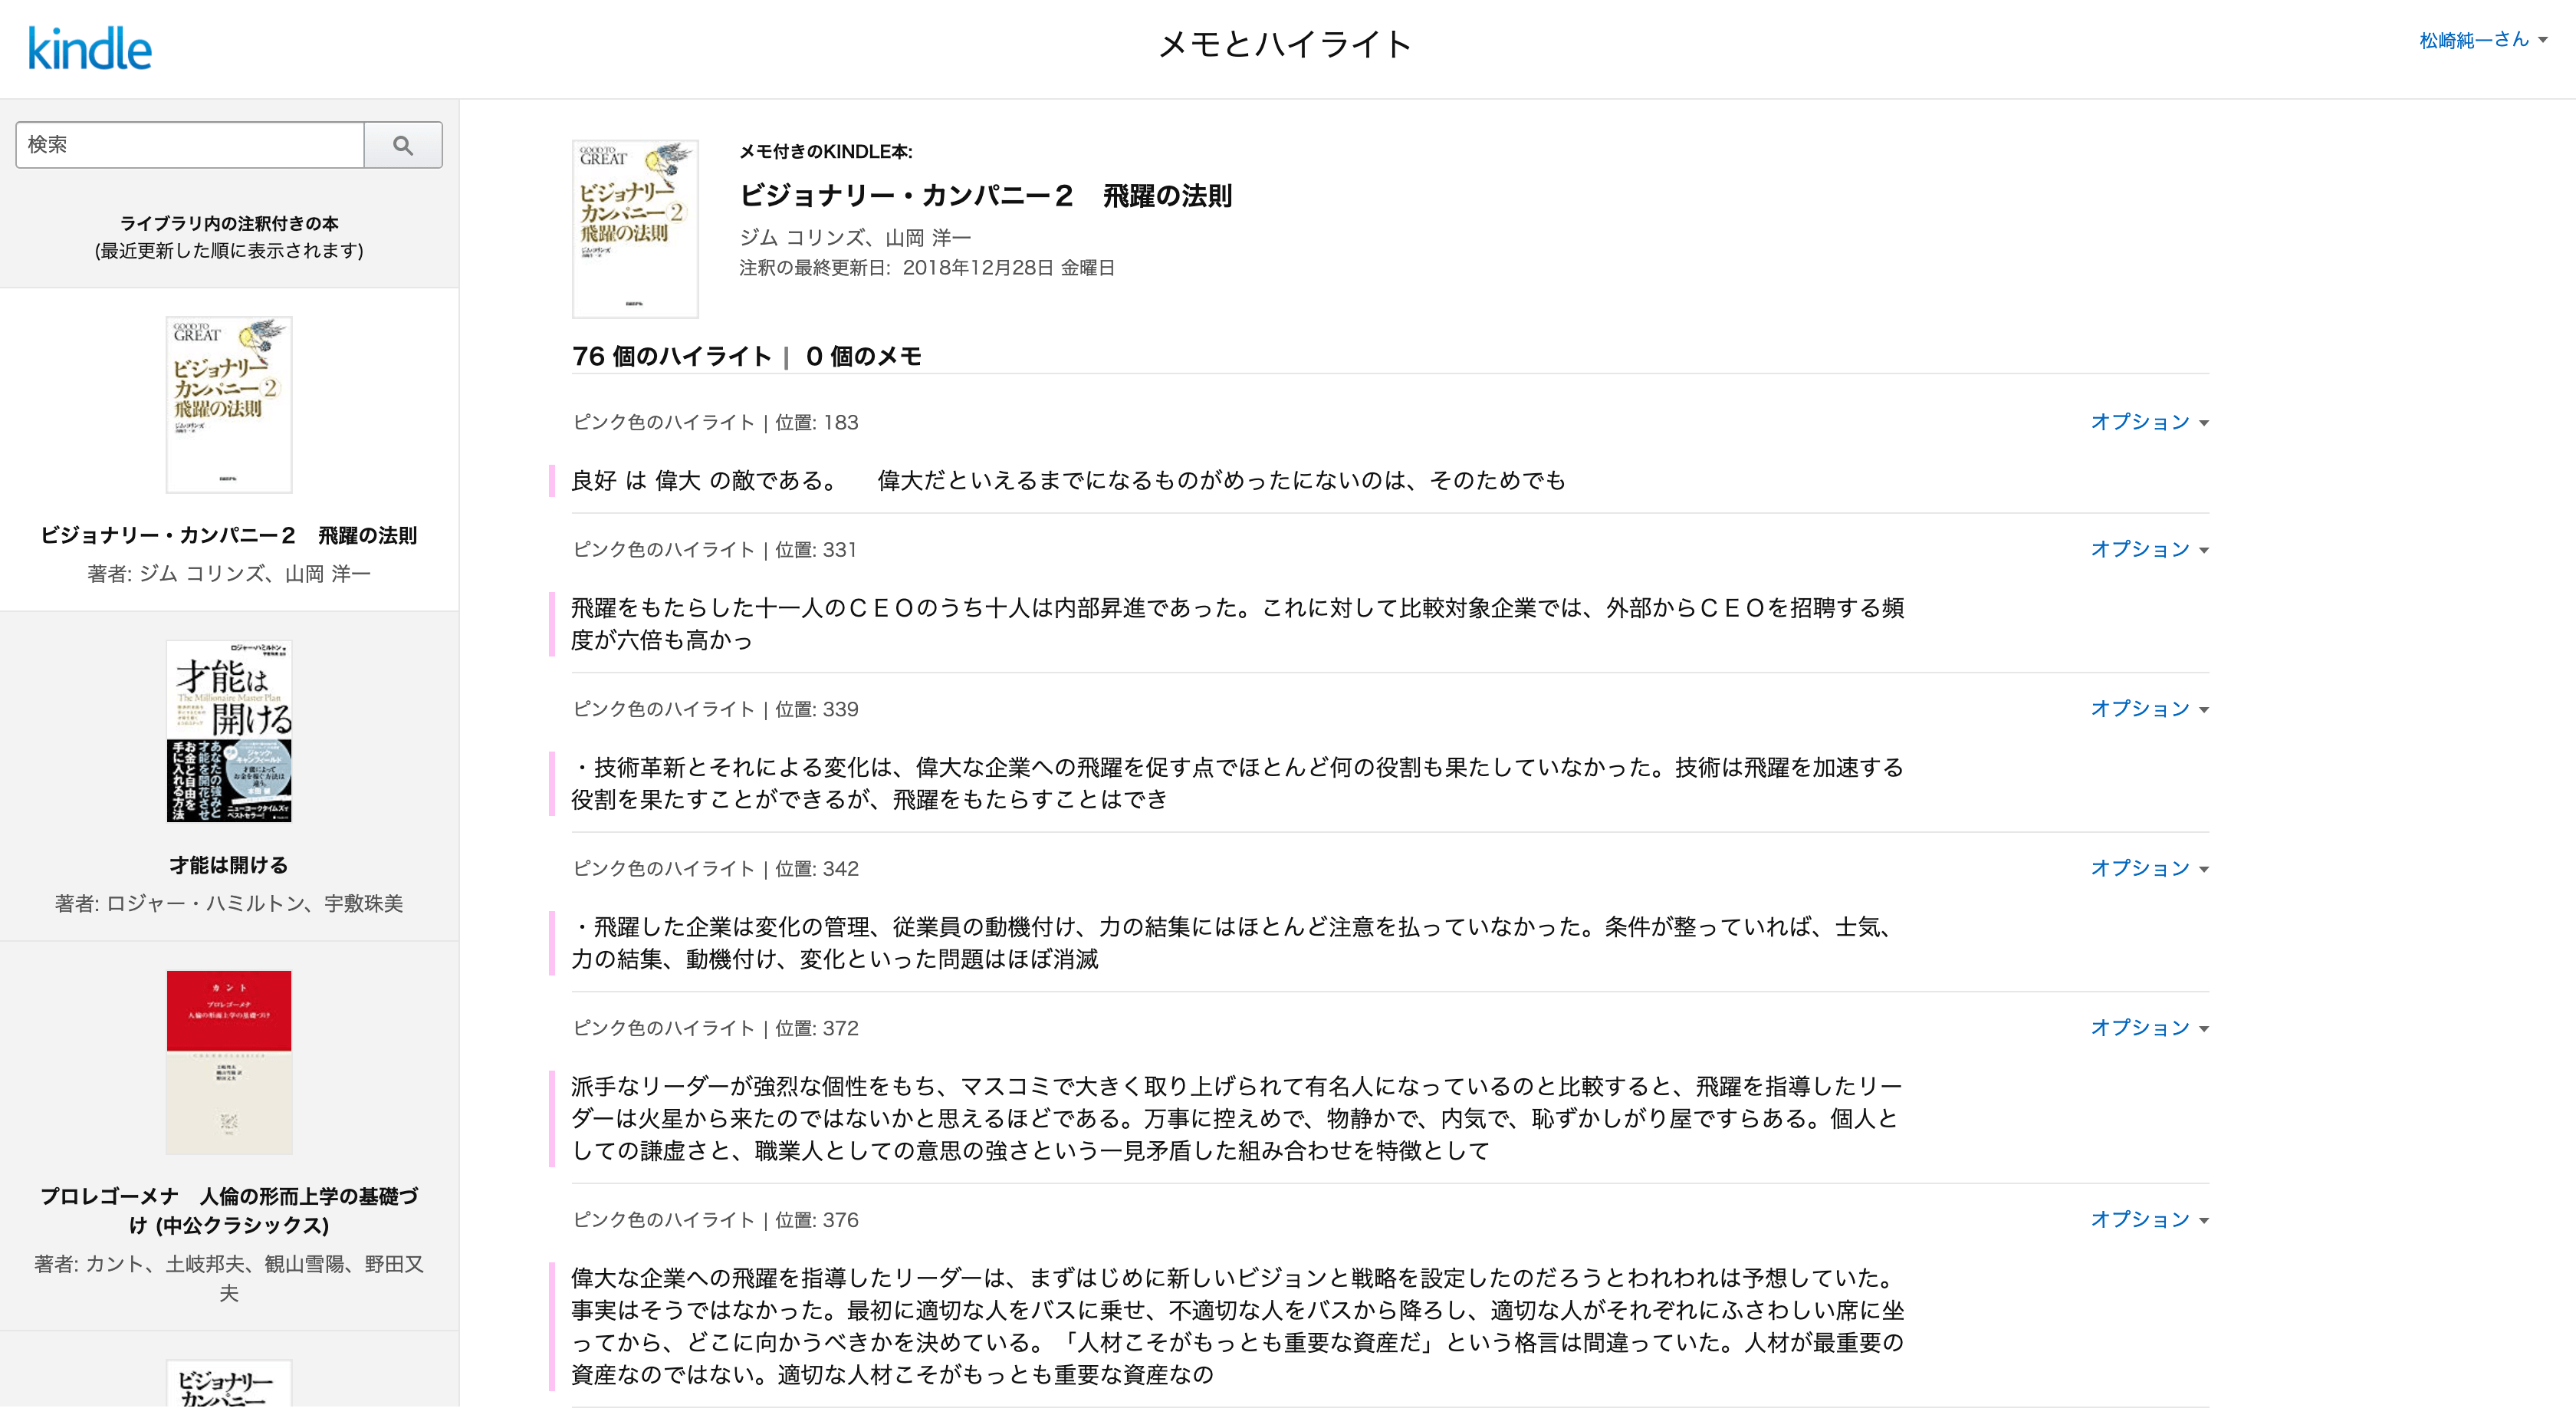 Kindleでメモとハイライトの一覧を一括でコピー ペーストする方法 Jmatsuzaki